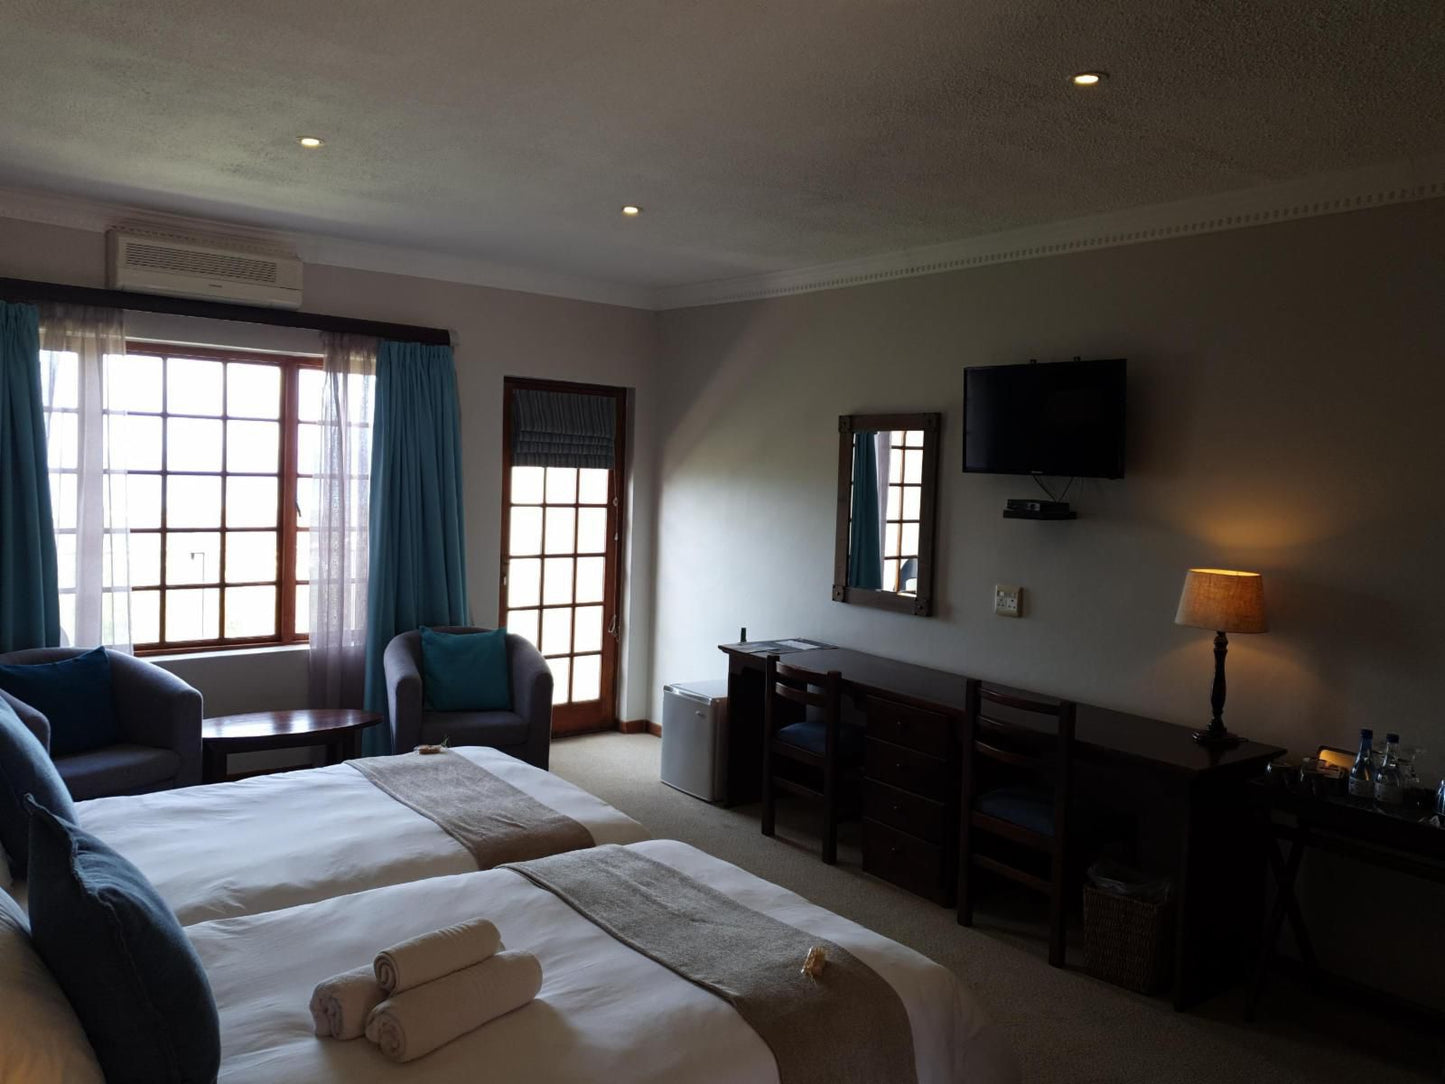 Ilita Lodge Great Brak River Western Cape South Africa Window, Architecture, Bedroom